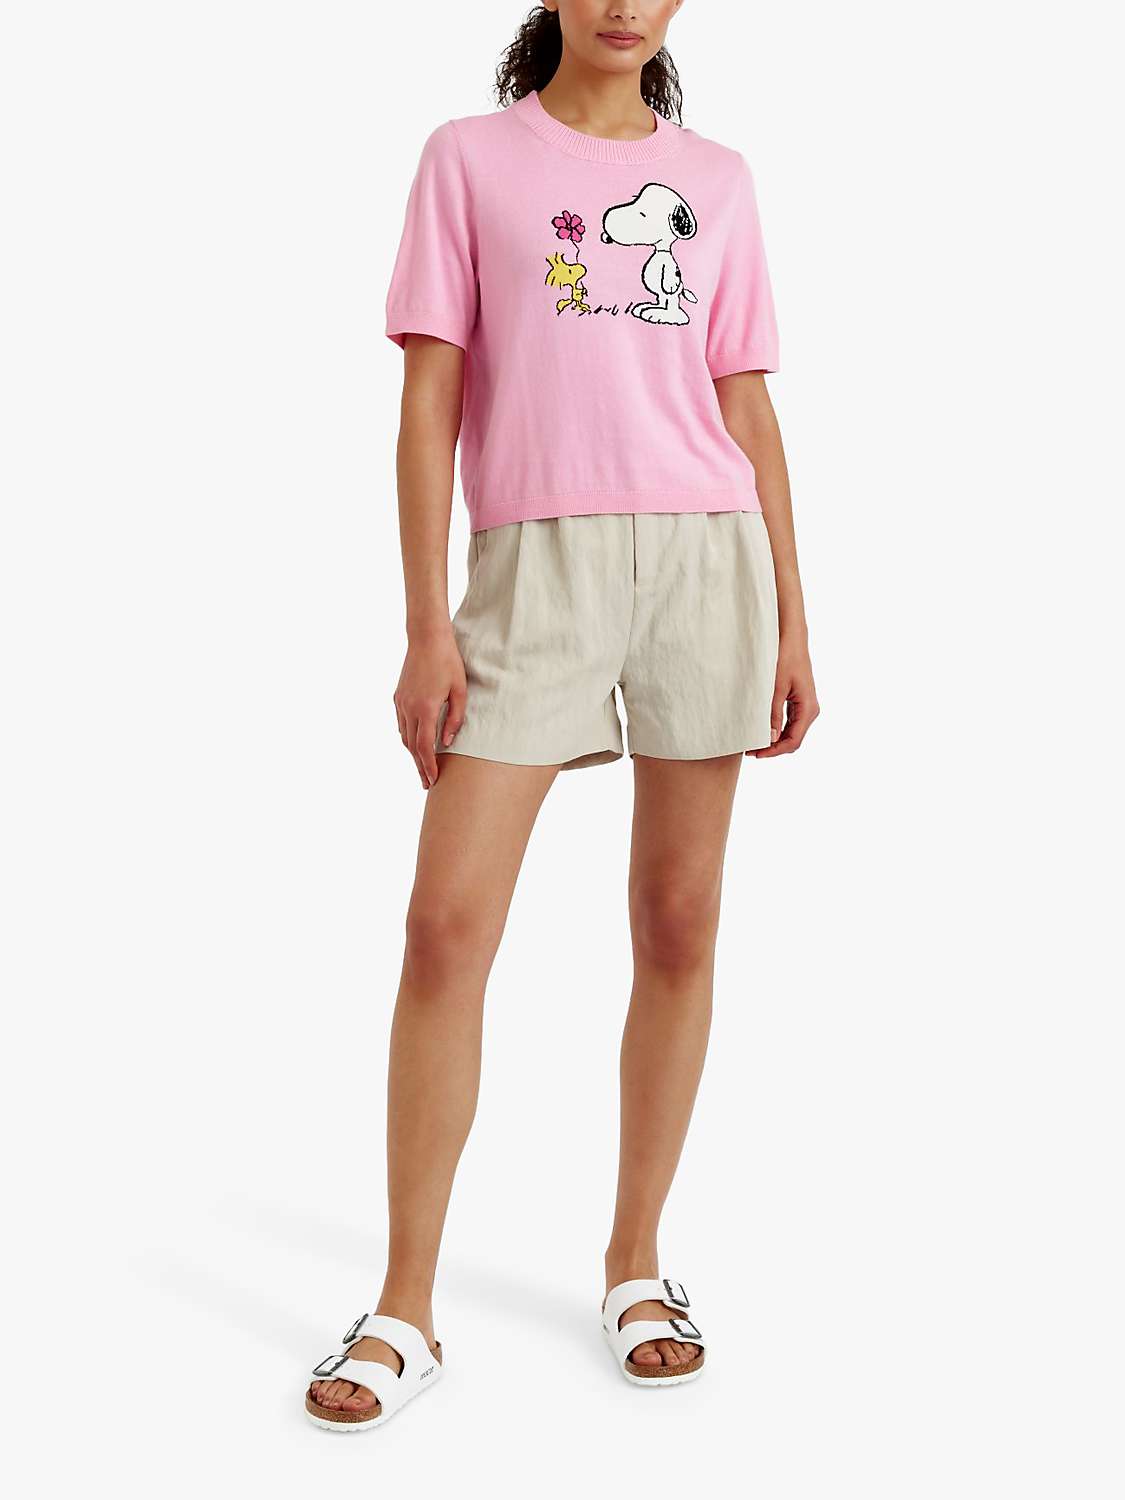 Buy Chinti & Parker Flower Power Peanuts T-Shirt, Fondant Pink/Multi Online at johnlewis.com